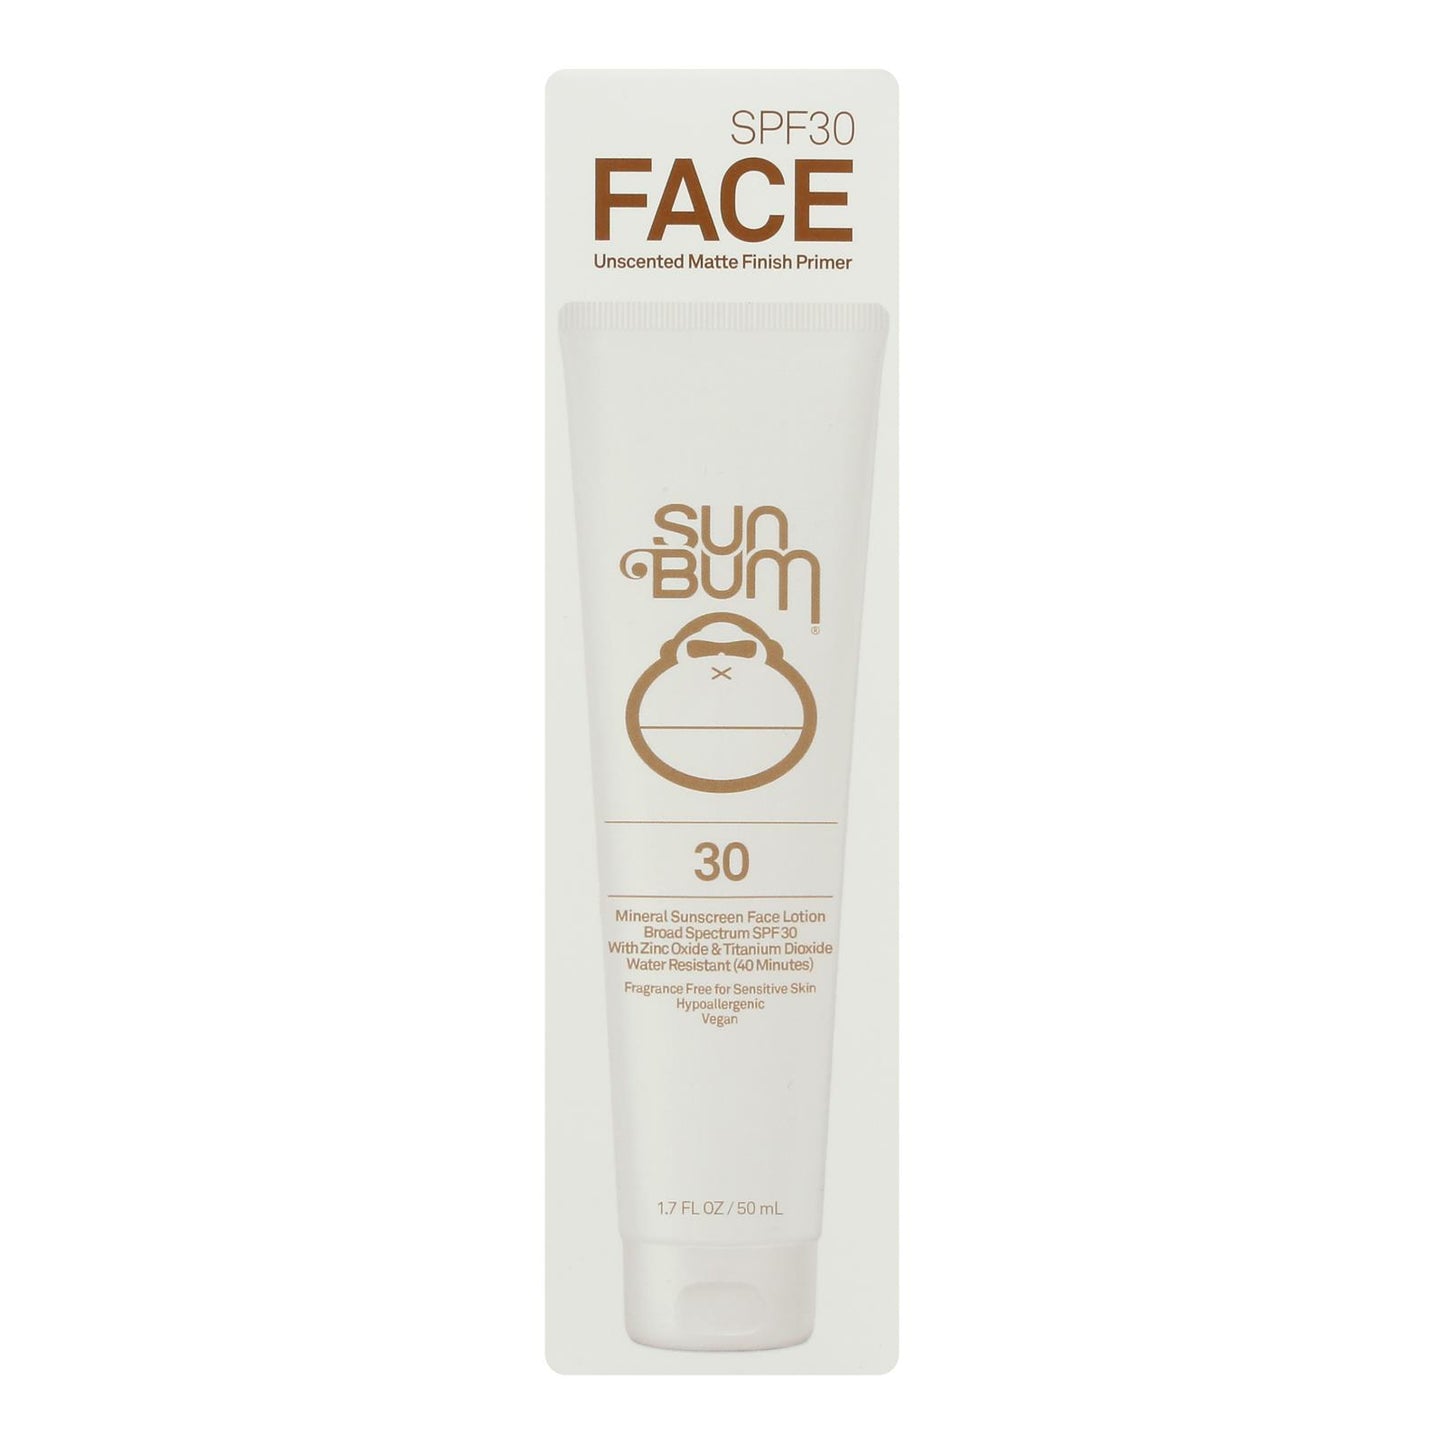 Sun Bum Mineral Lotion for Face, SPF 30, 1.7 fl oz